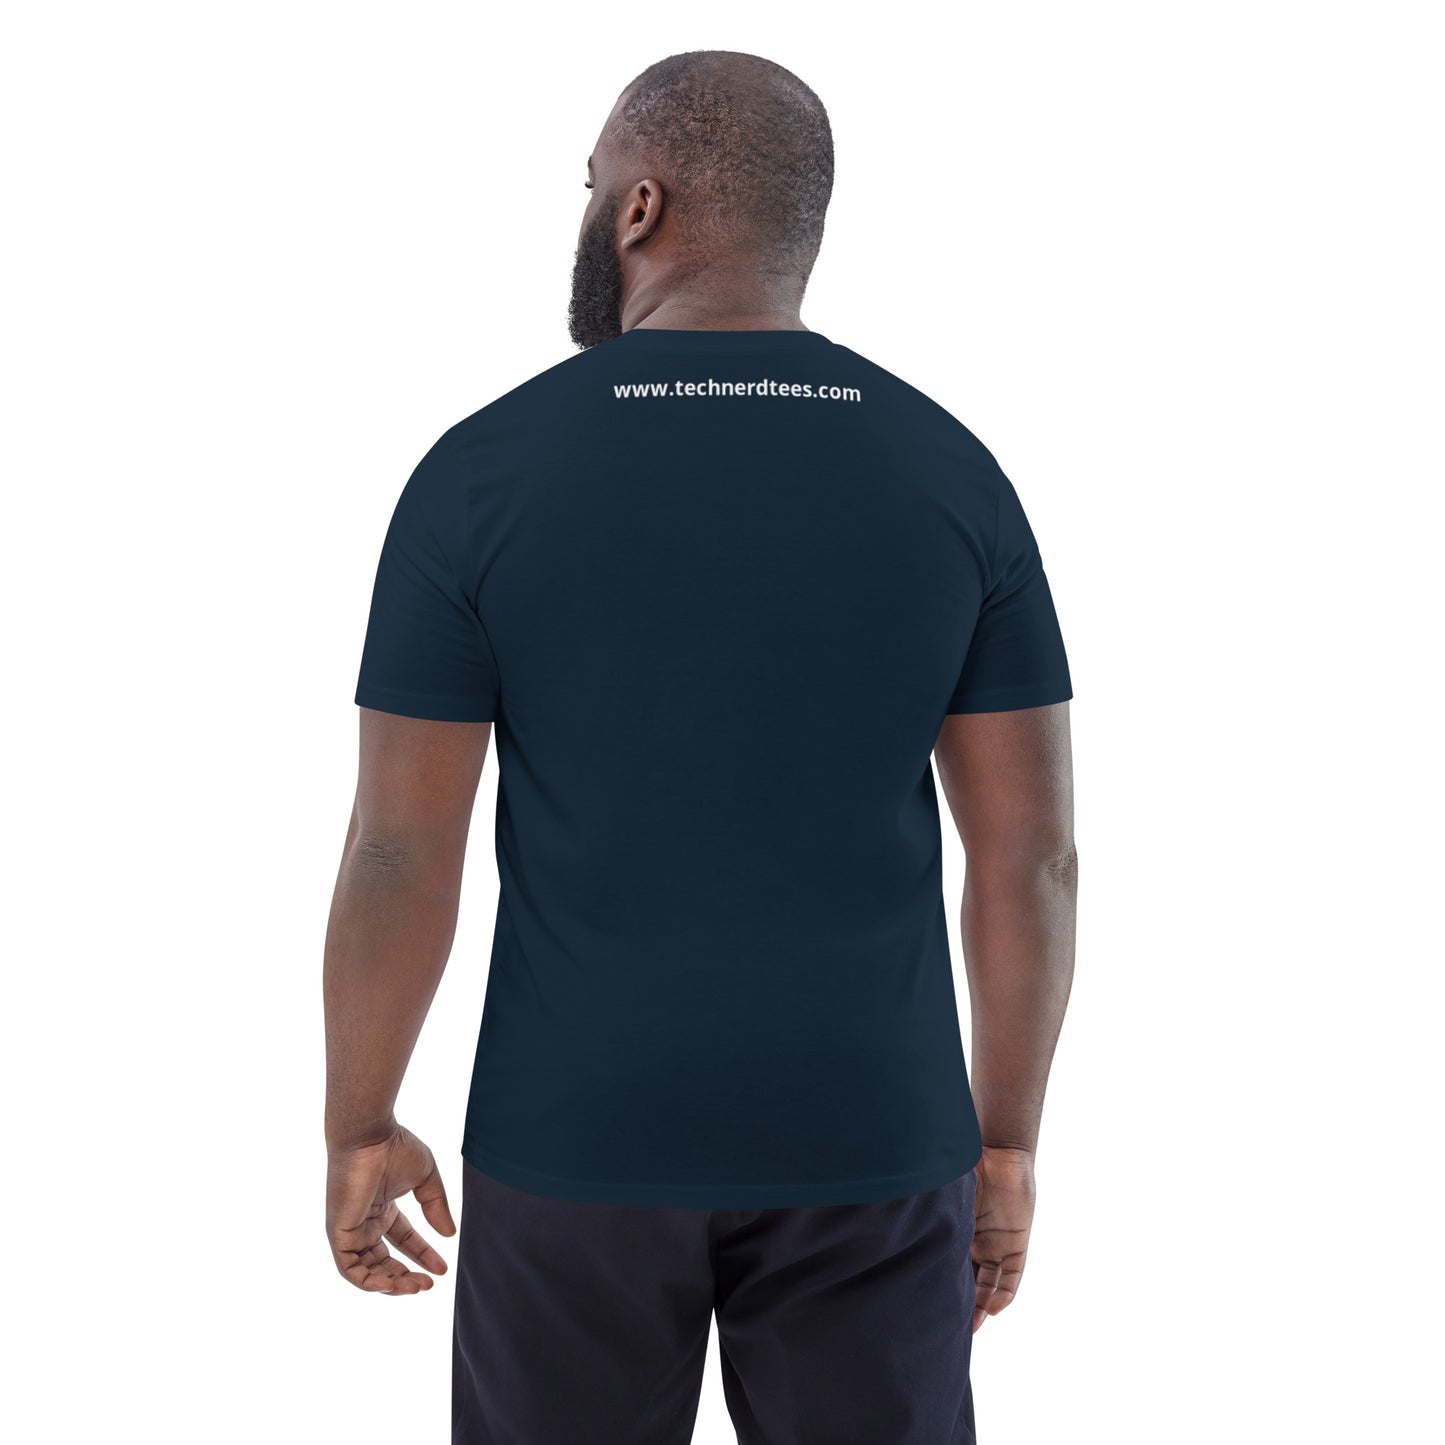 Camiseta unisex de algodón orgánico con fluidez en Java